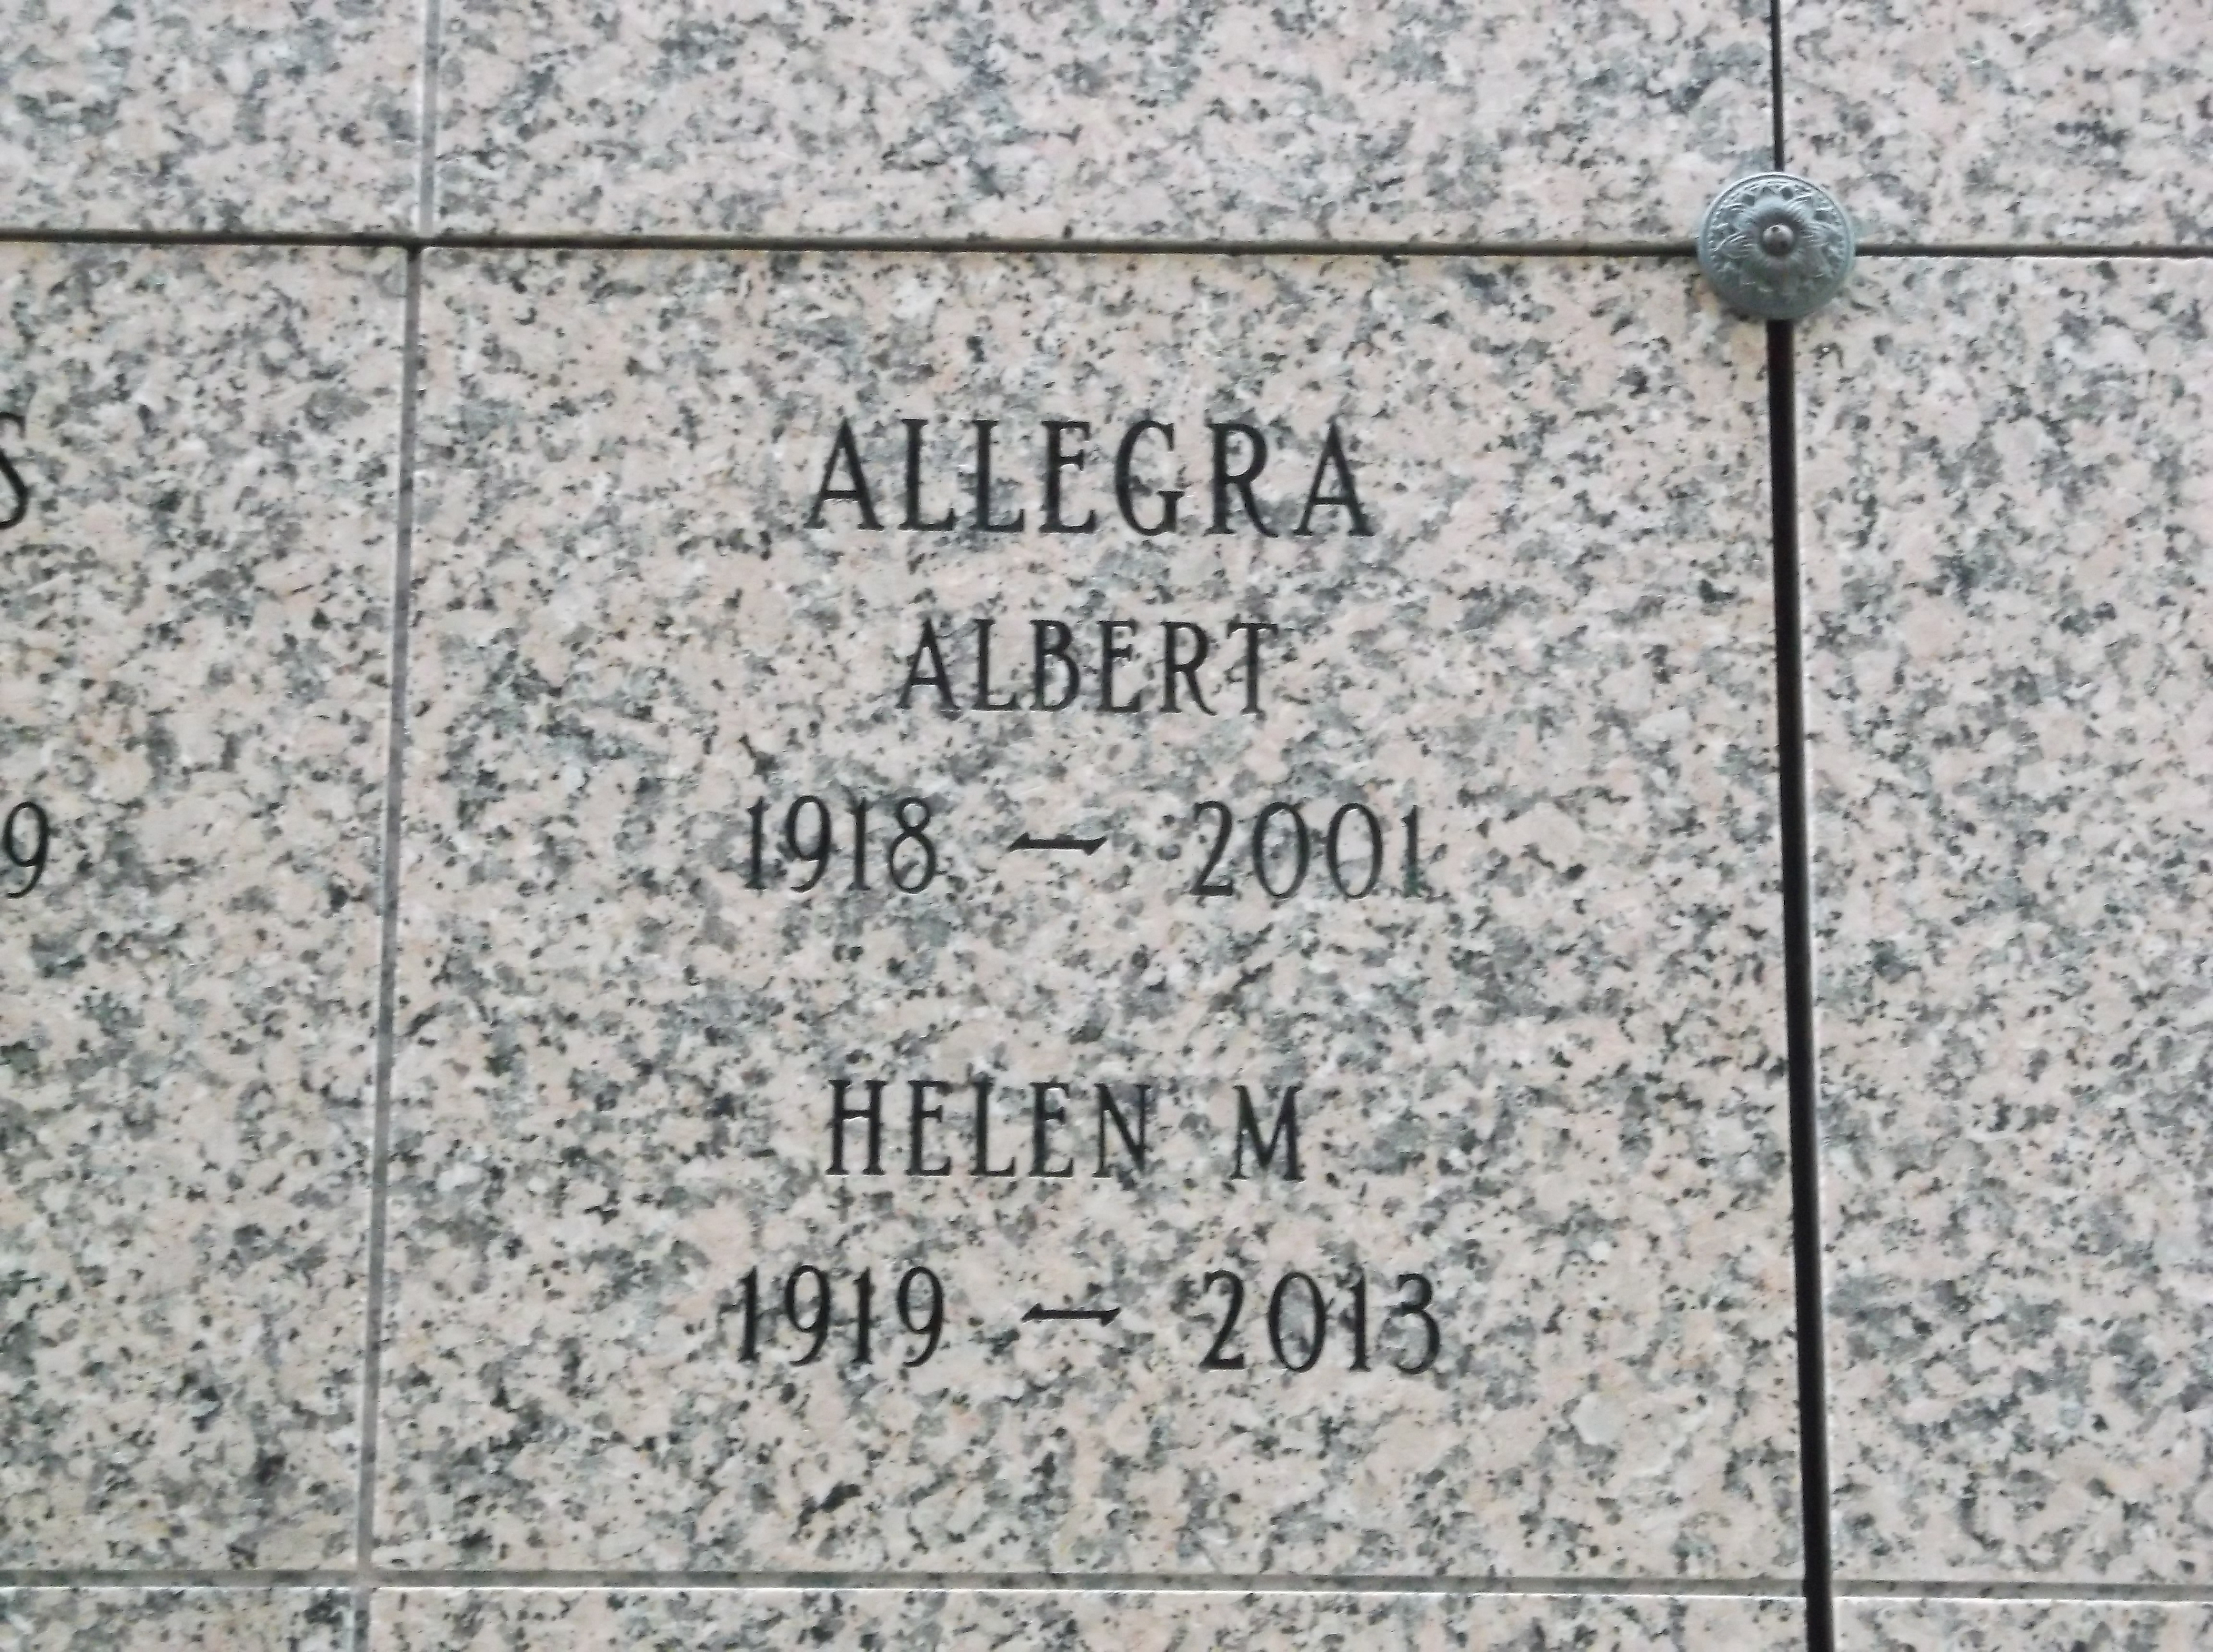 Helen M Allegra